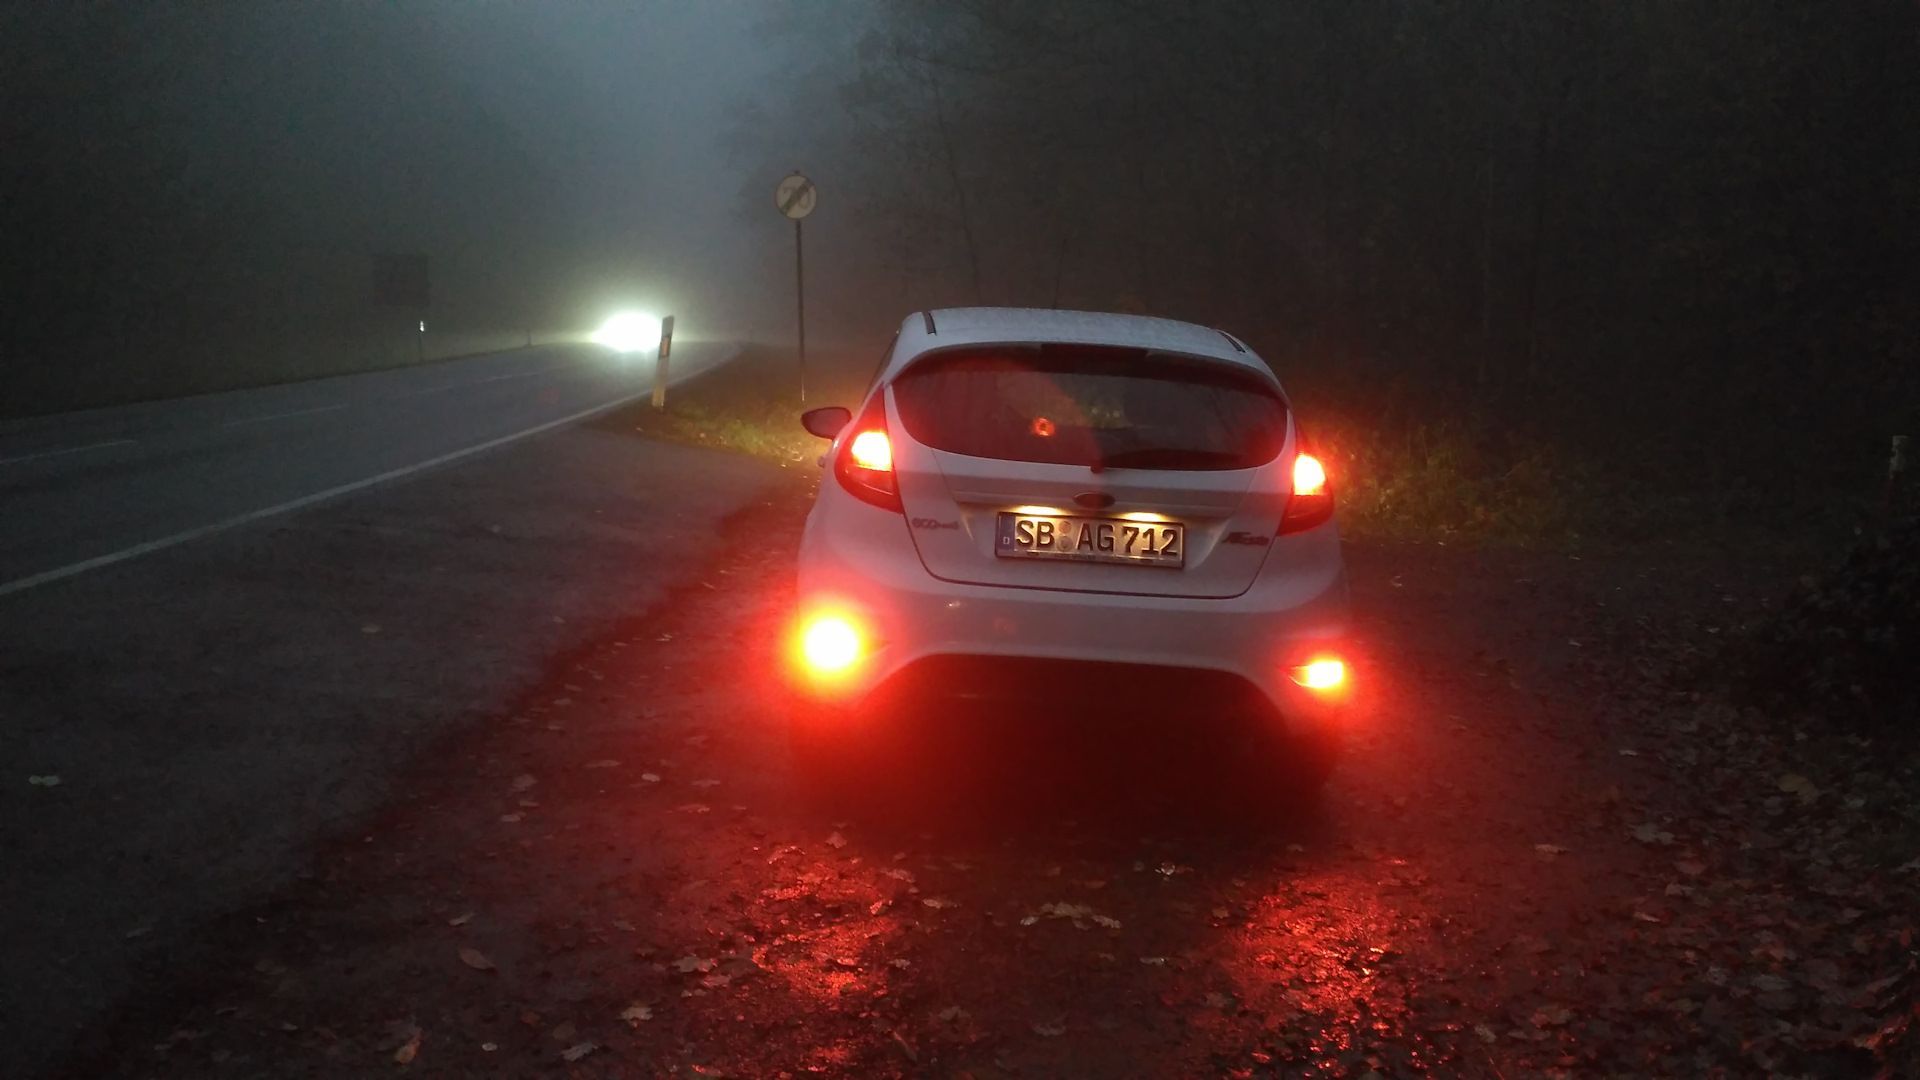 Противотуманные фары когда включая. Ford Fiesta противотуманки задние. Задняя противотуманная фара в тумане Солярис. Свет противотуманных фар Джентра 2013. Противотуманныйый фонари на машине.